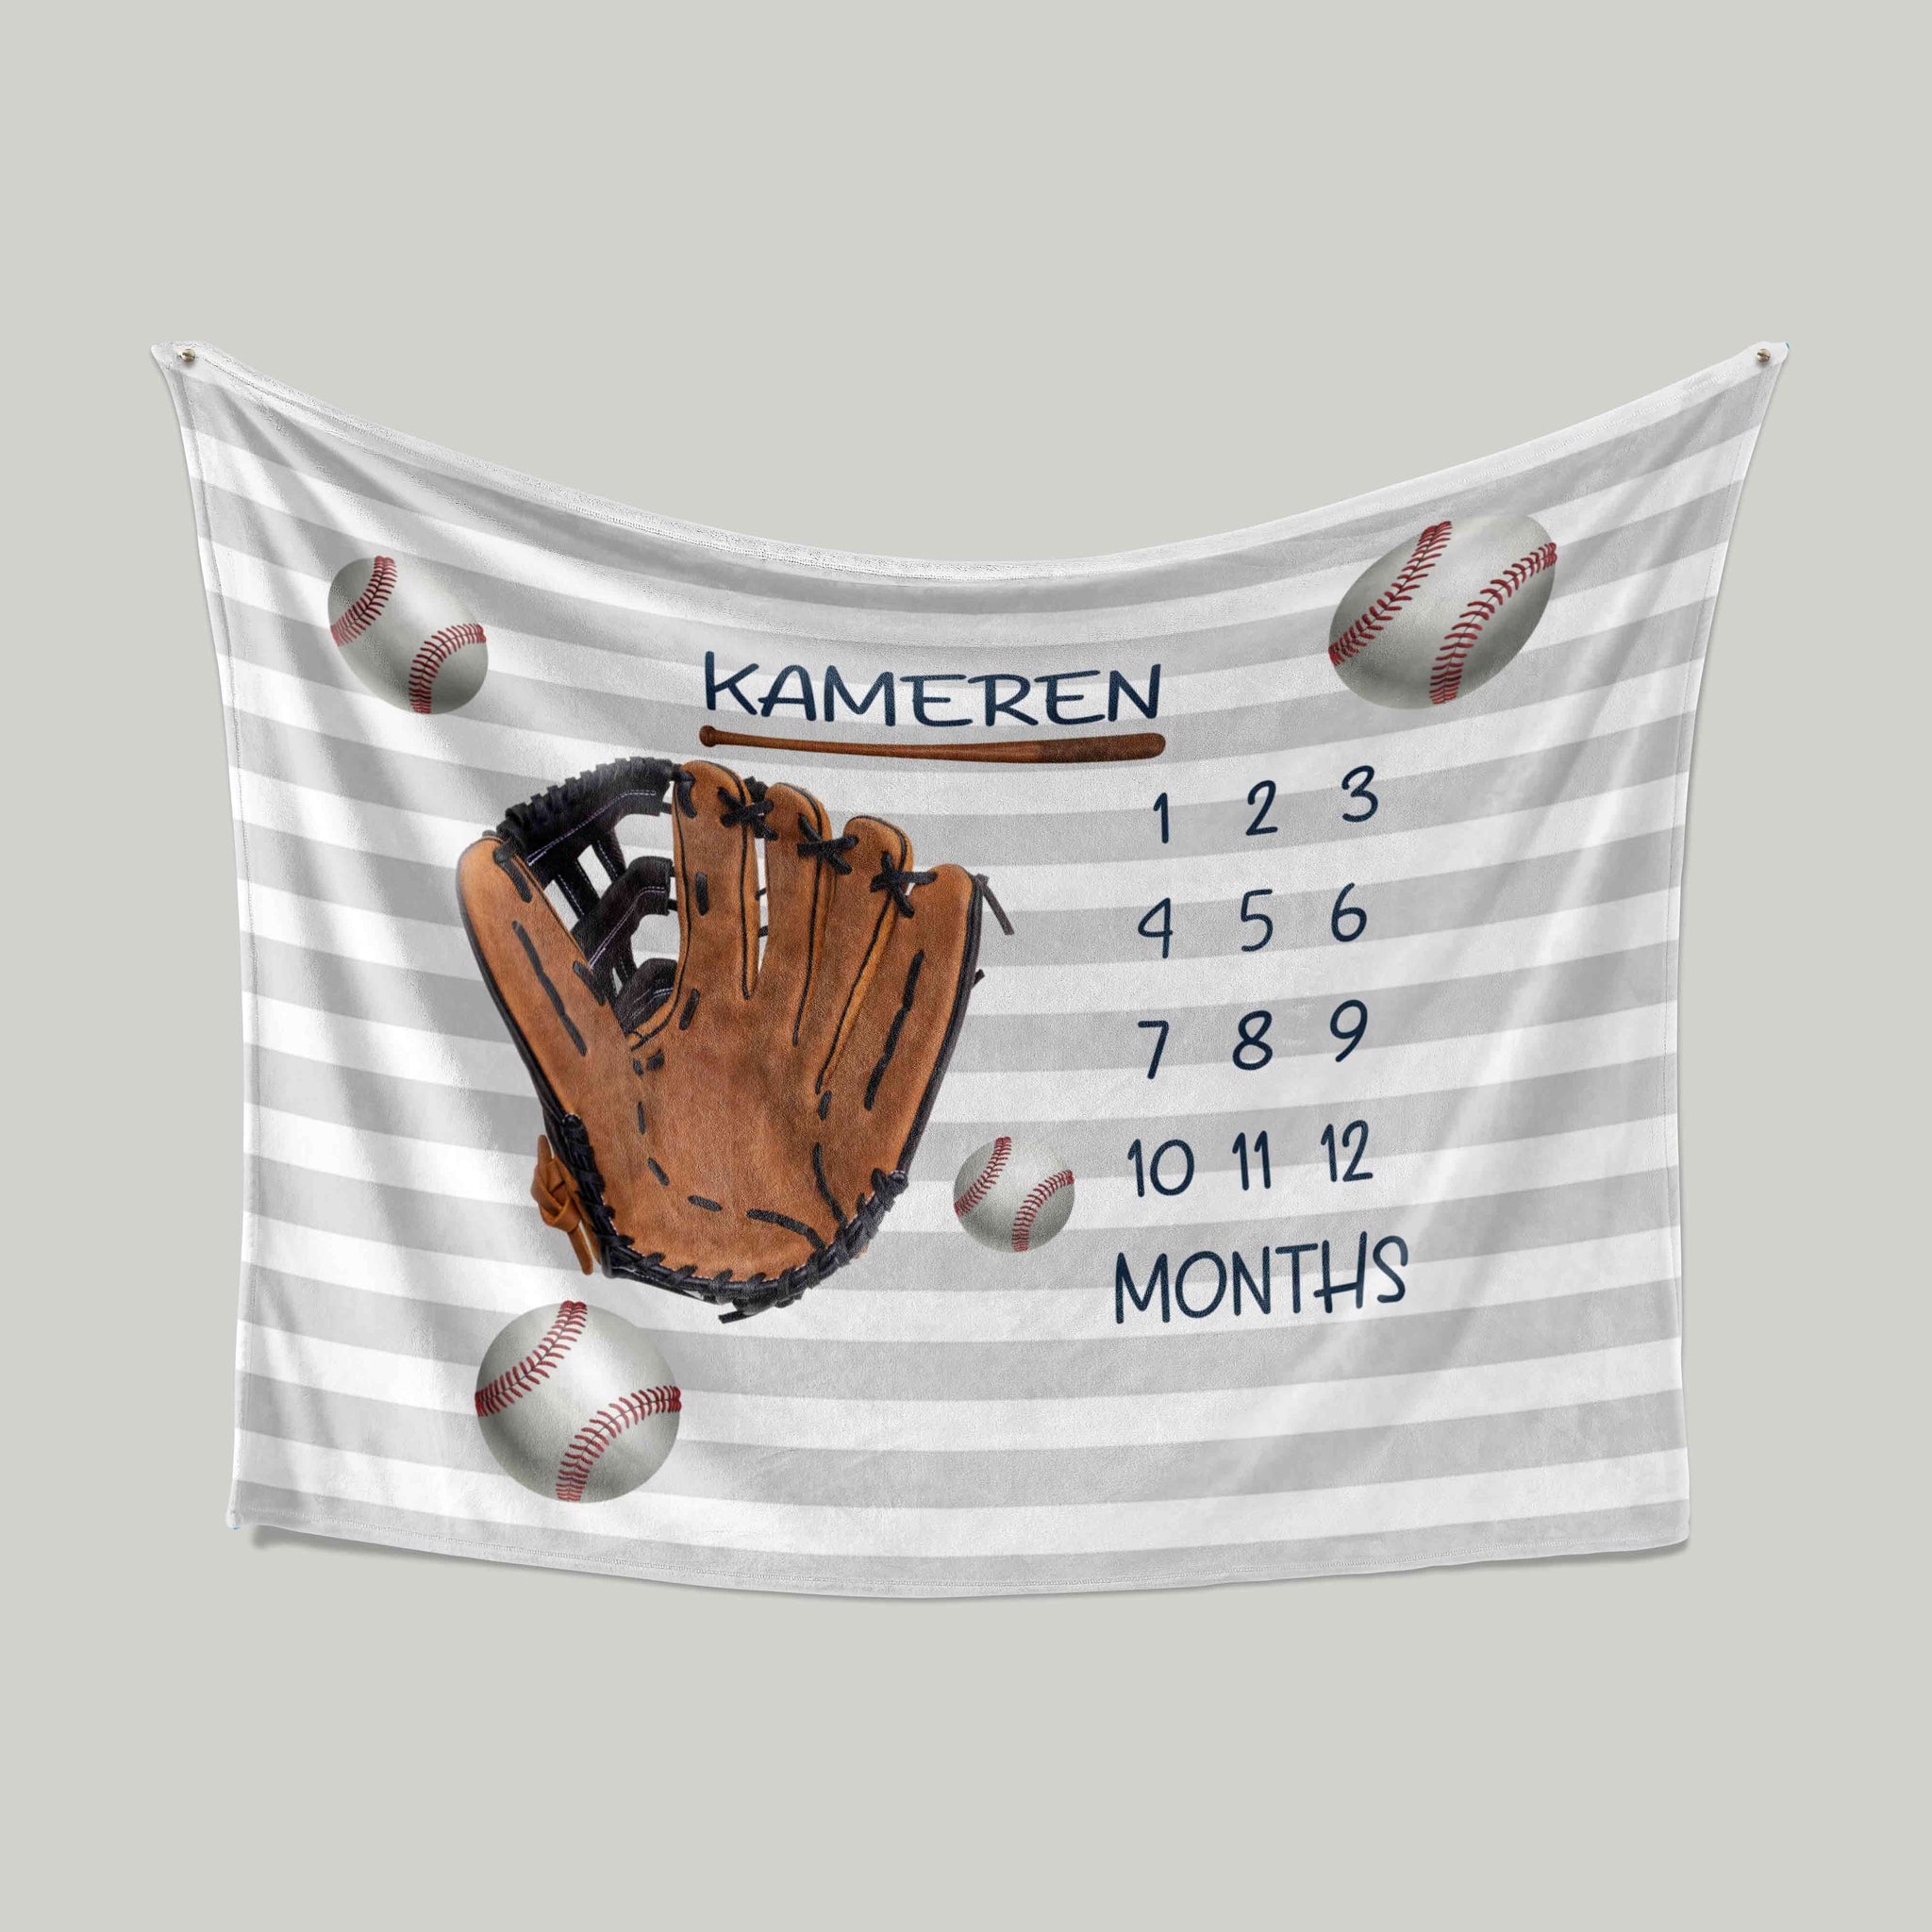 Personalized Name Blanket, Baseball Blanket, Milestone Blanket, Month Blanket, Baby Blanket